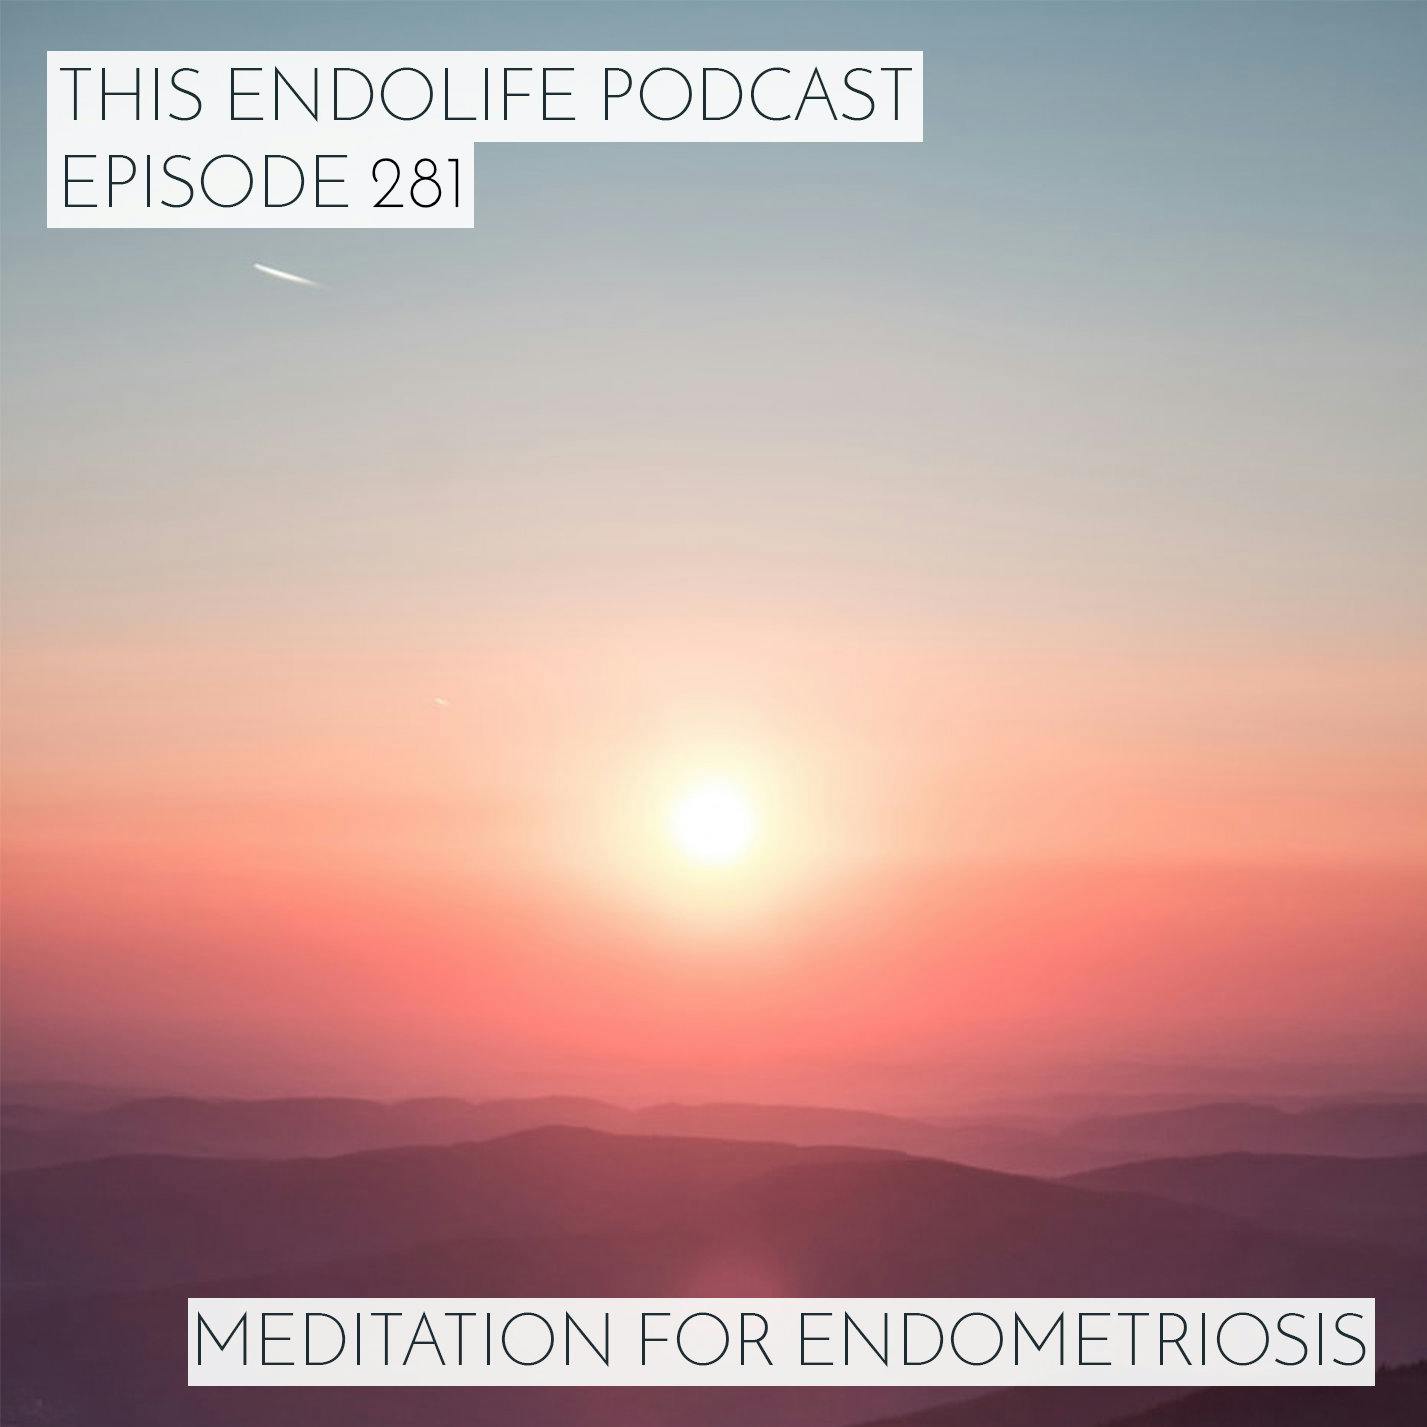 REPLAY: New Year Meditation for Endometriosis